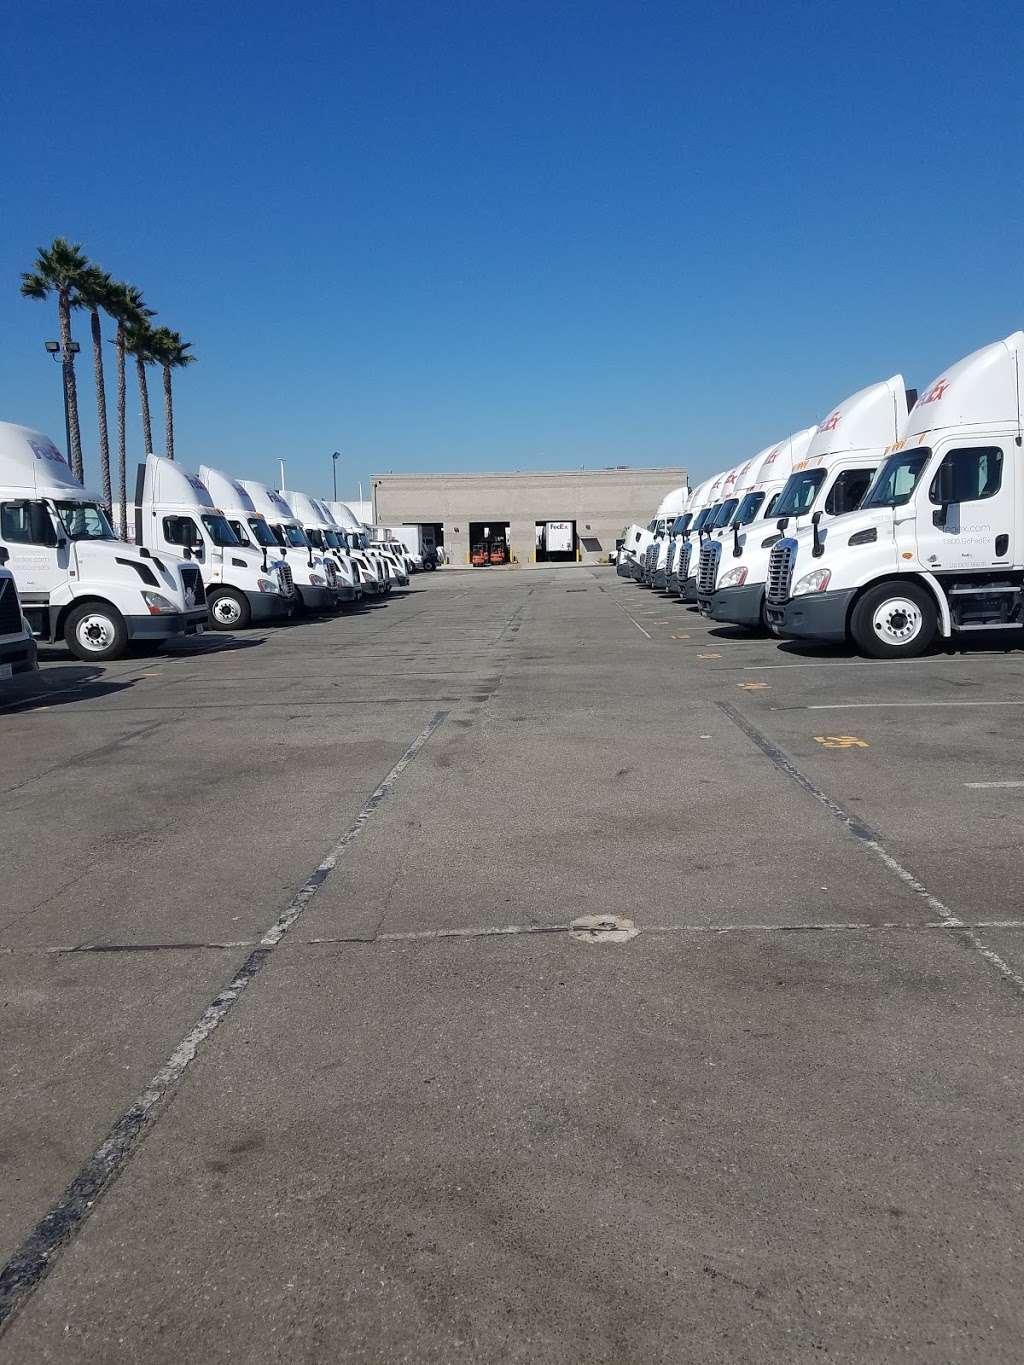 FedEx Ship Center | 201 W Manville St, Compton, CA 90220, USA | Phone: (800) 463-3339